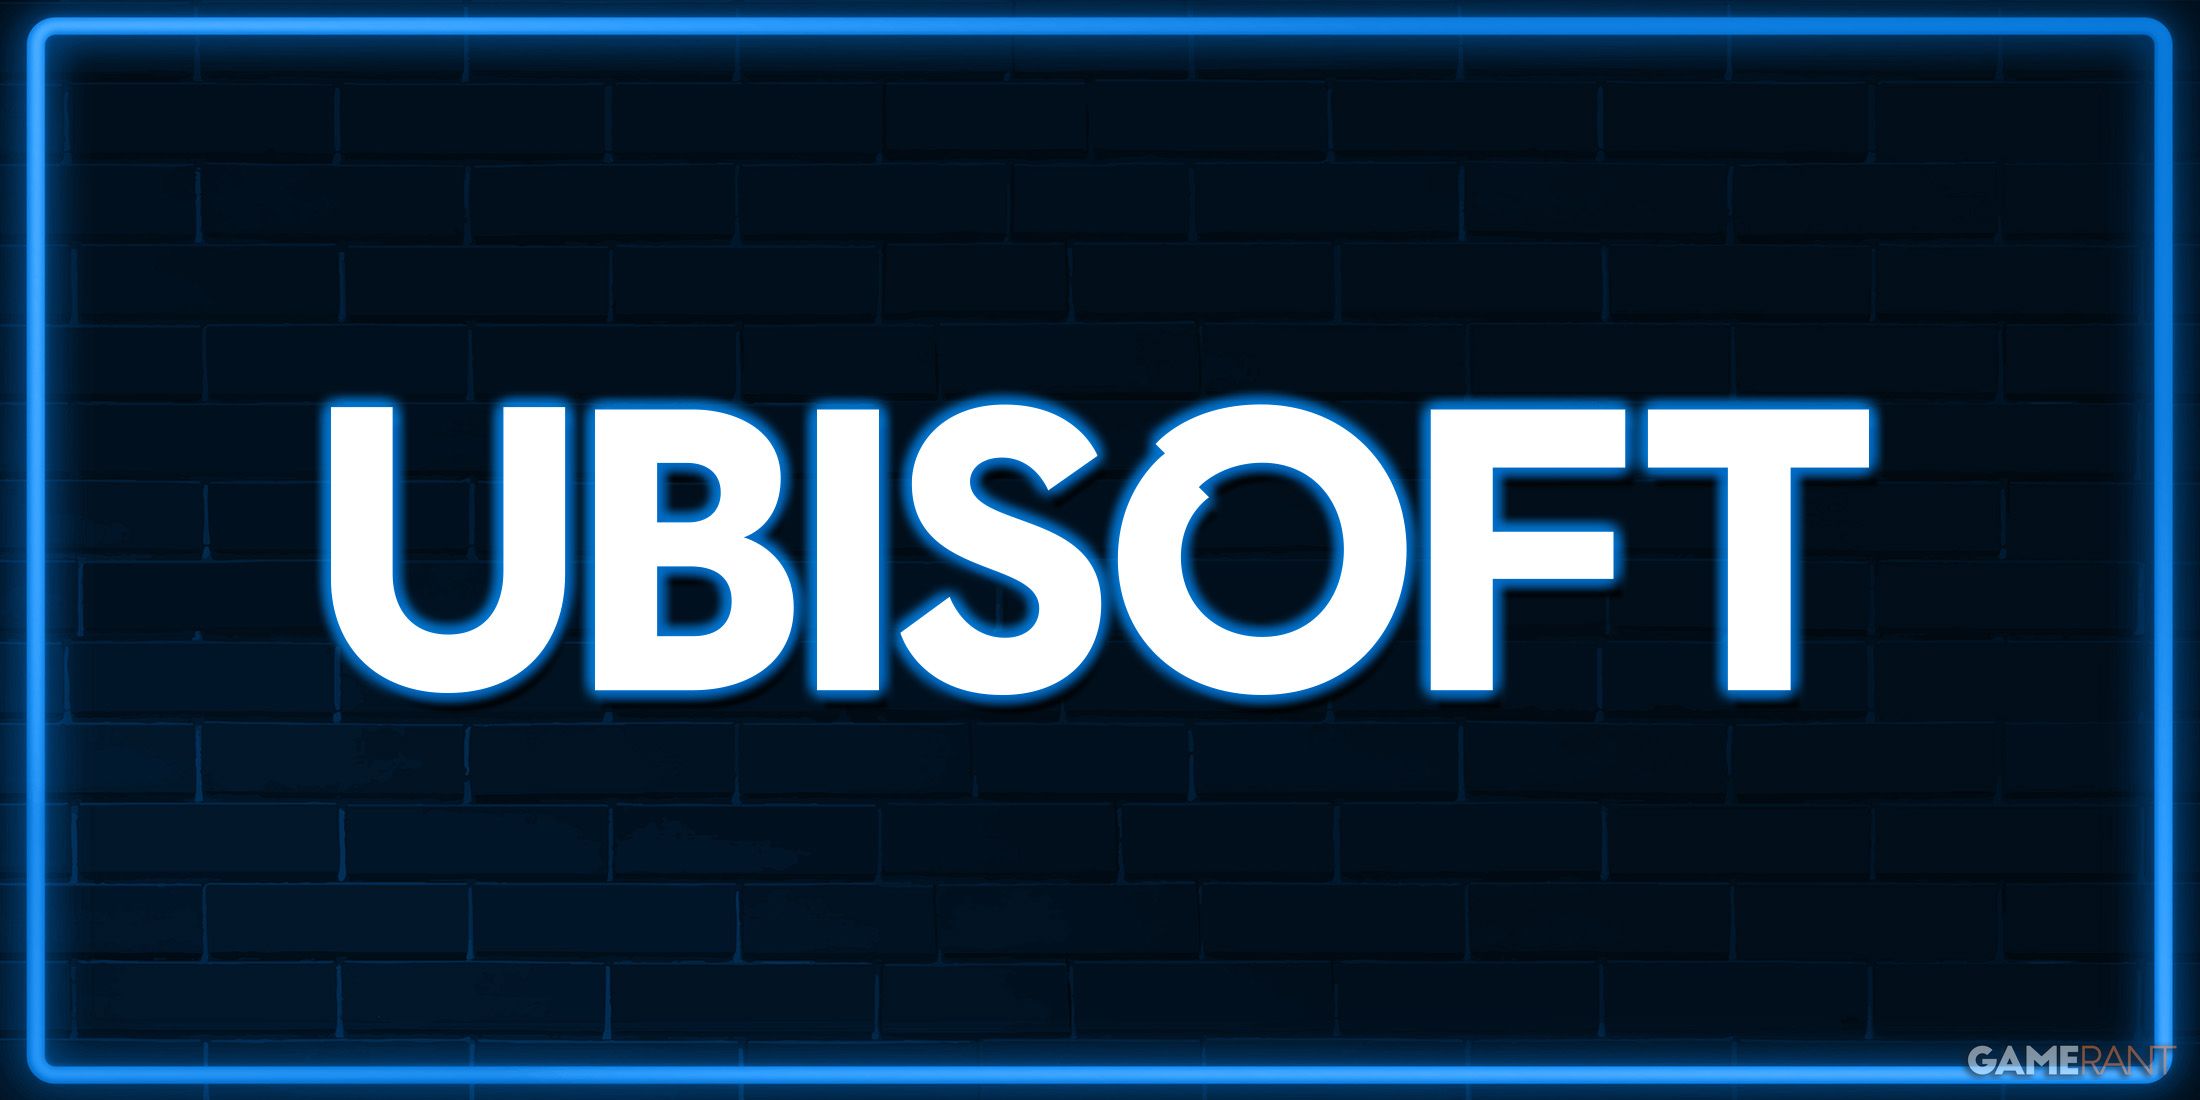 Ubisoft white blue neon sign on dark wall illustration